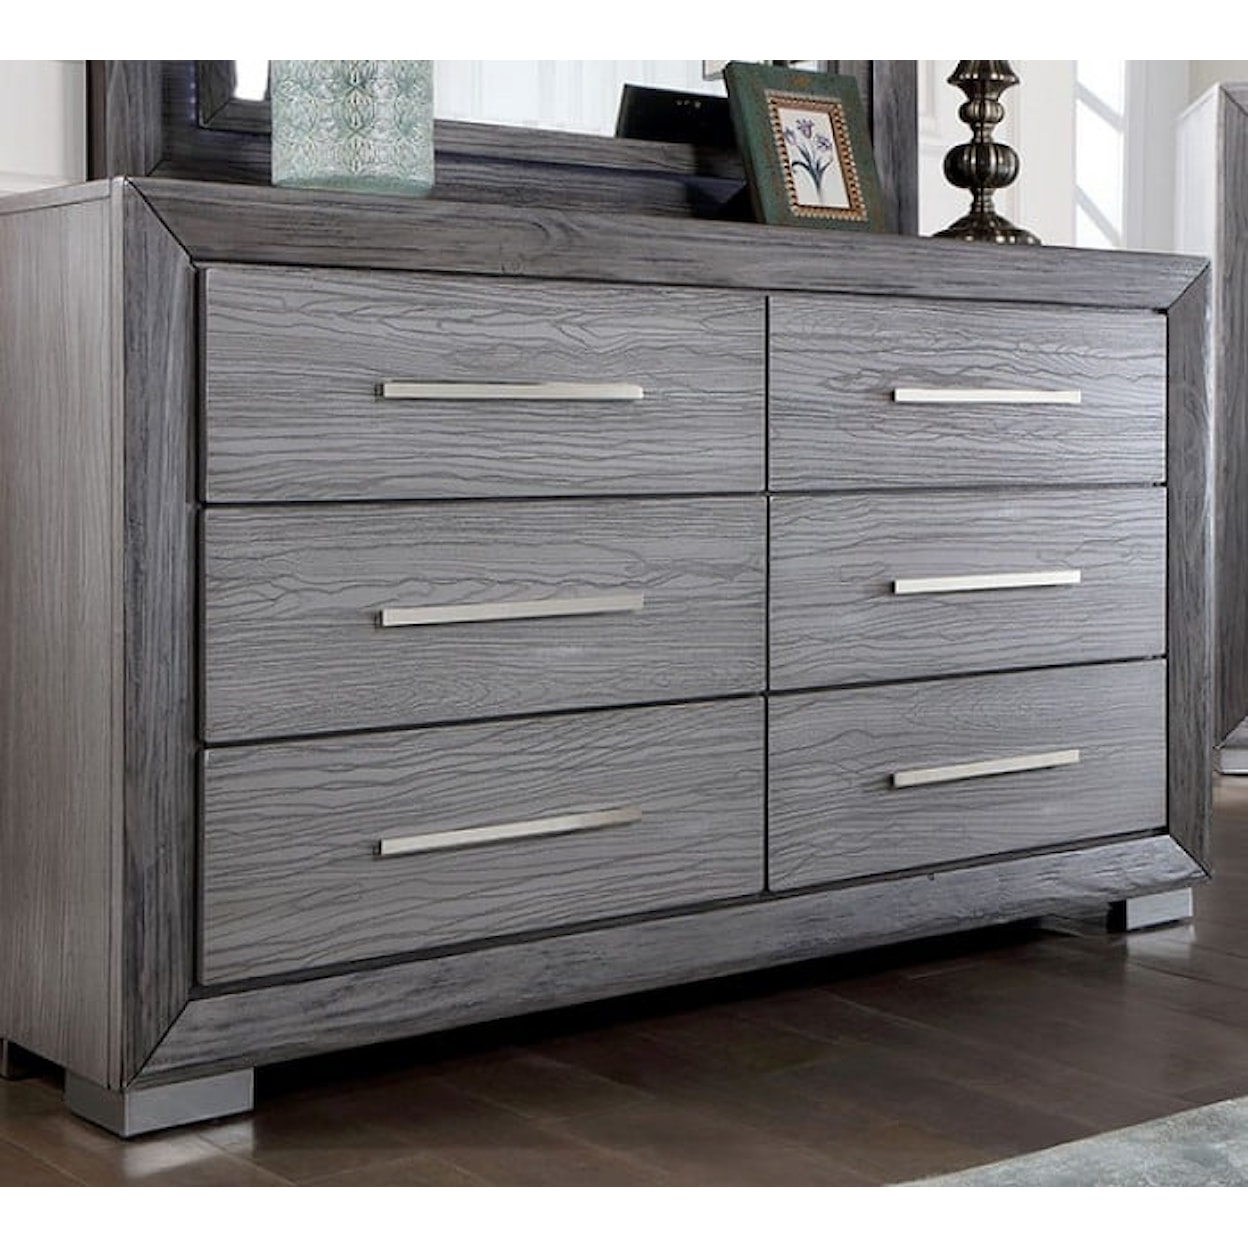 Furniture of America RAIDEN Gray Dresser